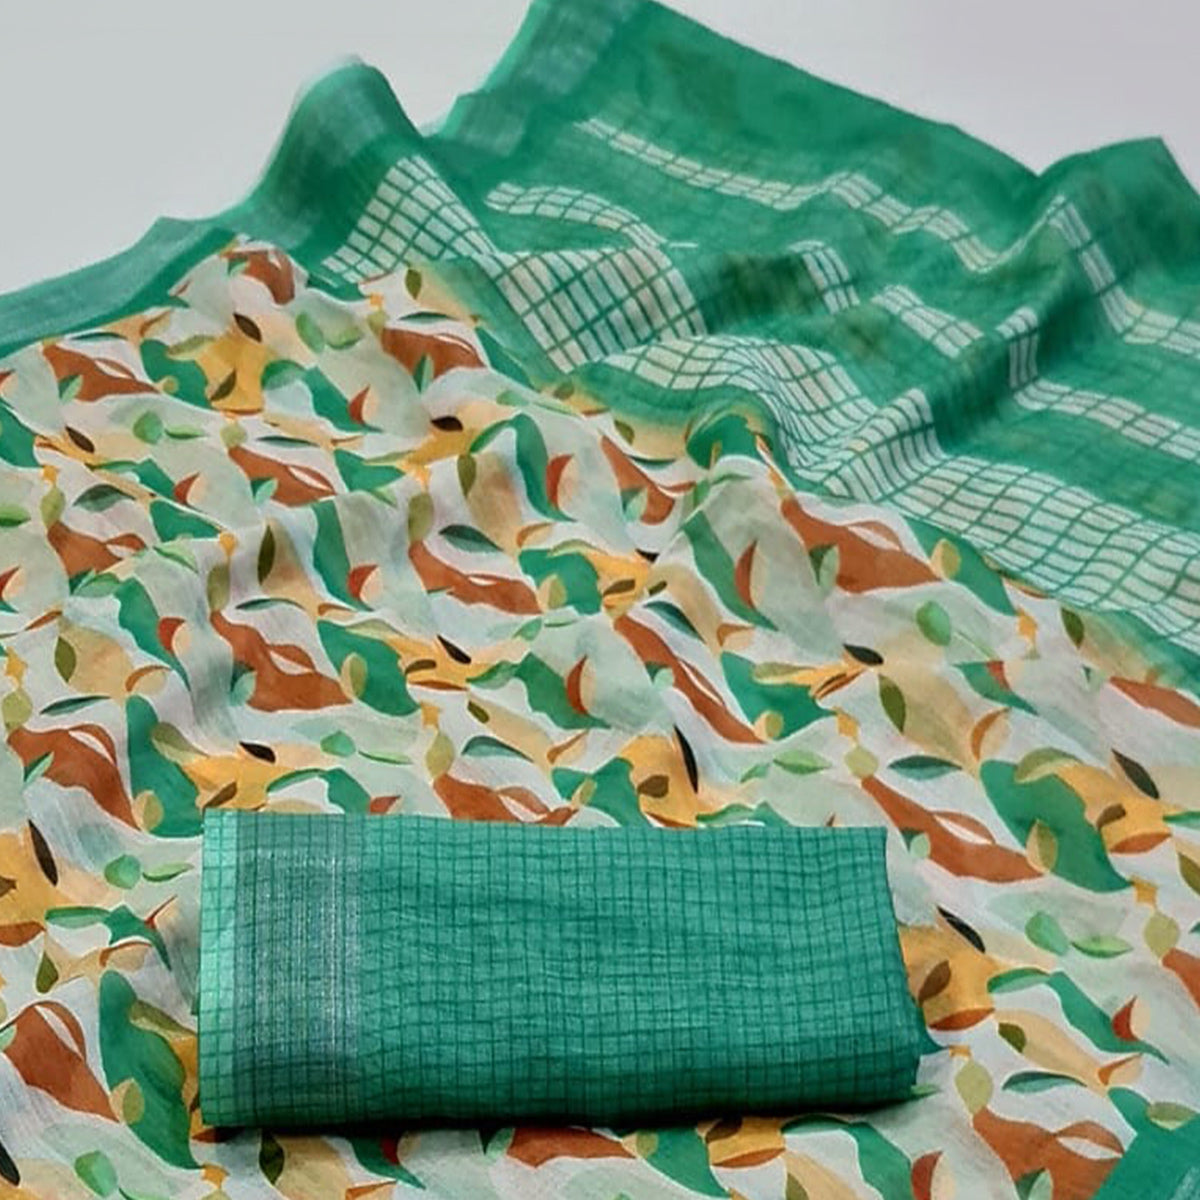 Multicolor Floral Digital Printed Linen Saree with Zari Border